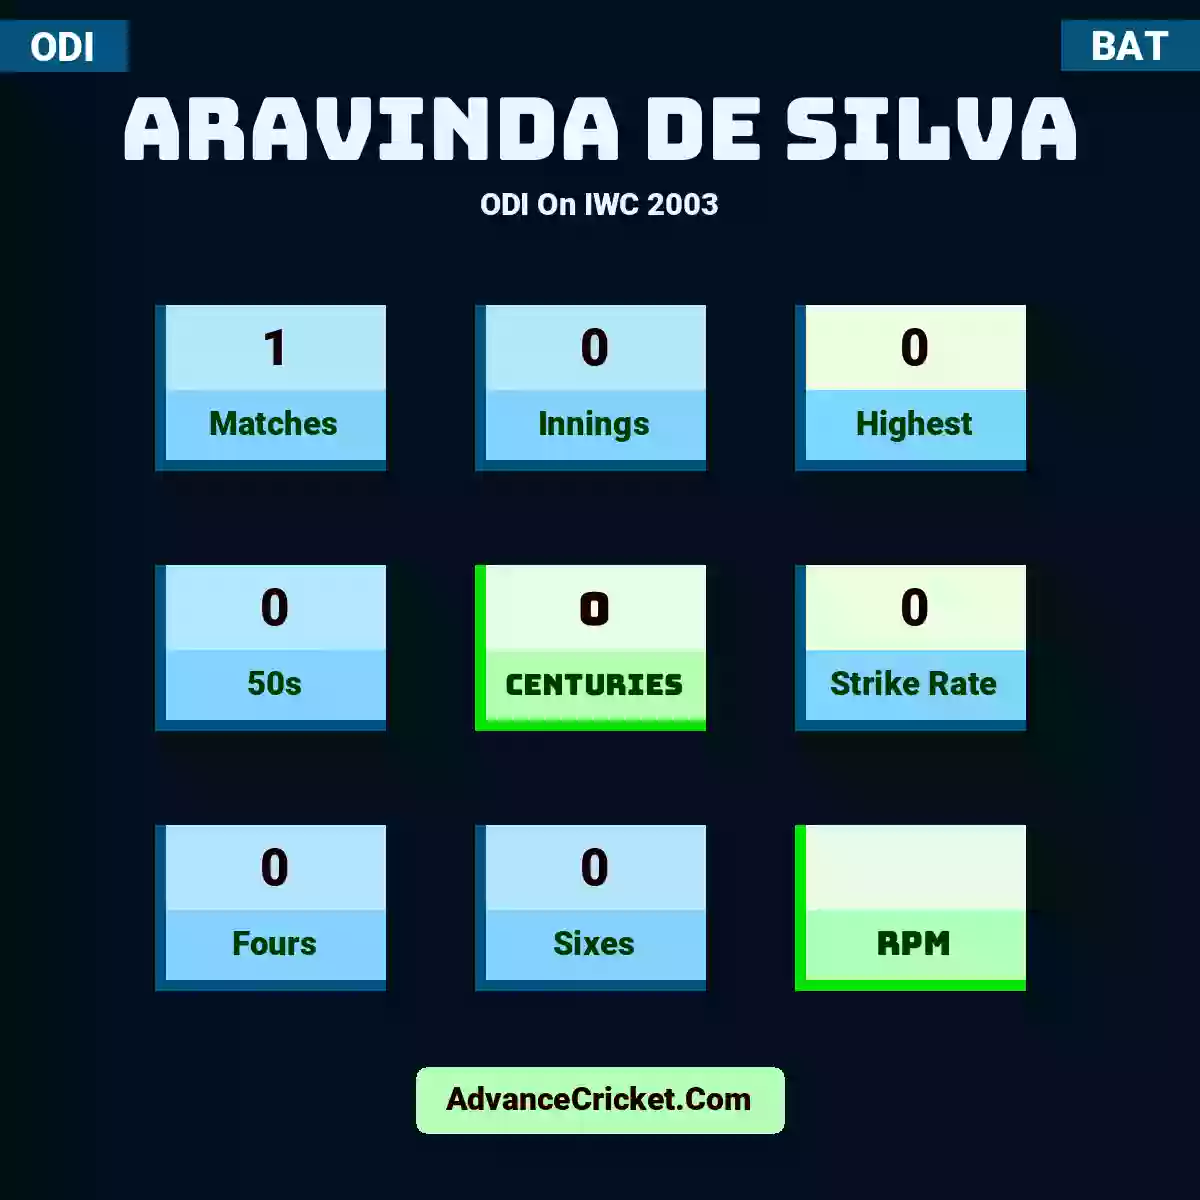 Aravinda de Silva ODI  On IWC 2003, Aravinda de Silva played 1 matches, scored 0 runs as highest, 0 half-centuries, and 0 centuries, with a strike rate of 0. A.Silva hit 0 fours and 0 sixes.